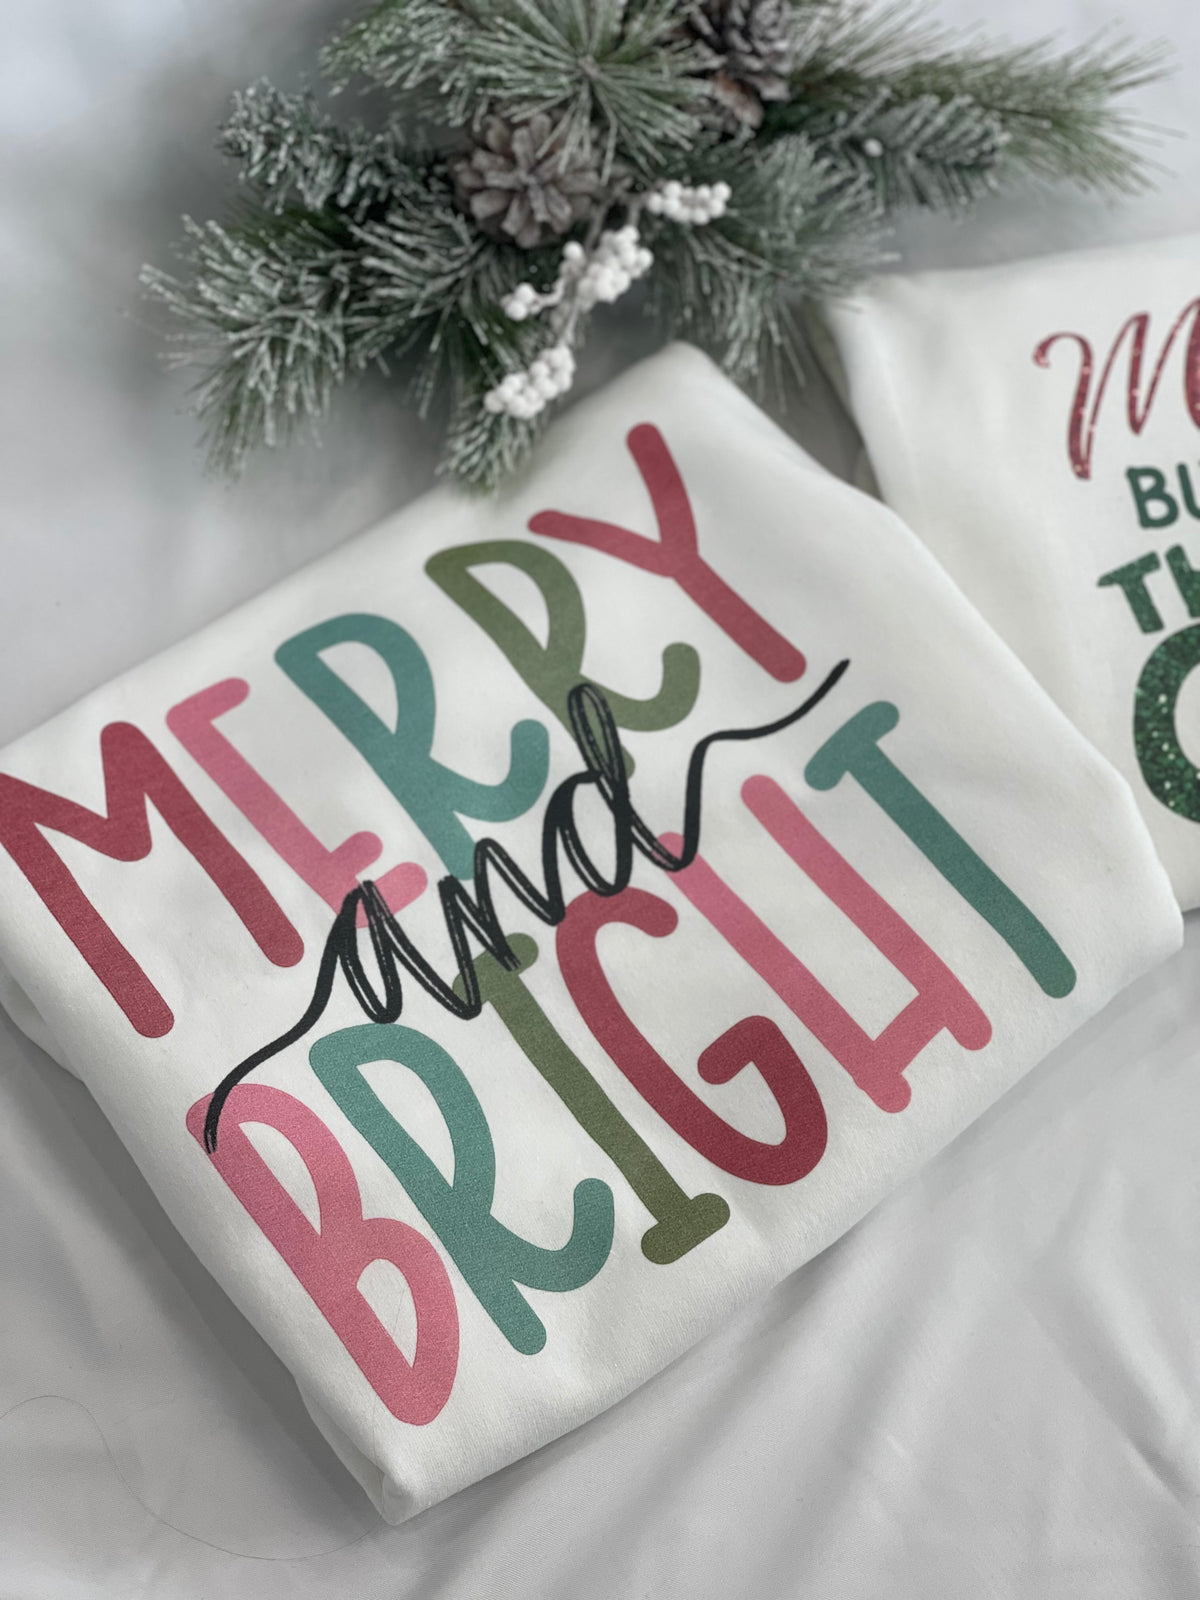 Merry and bright sweatshirt in white